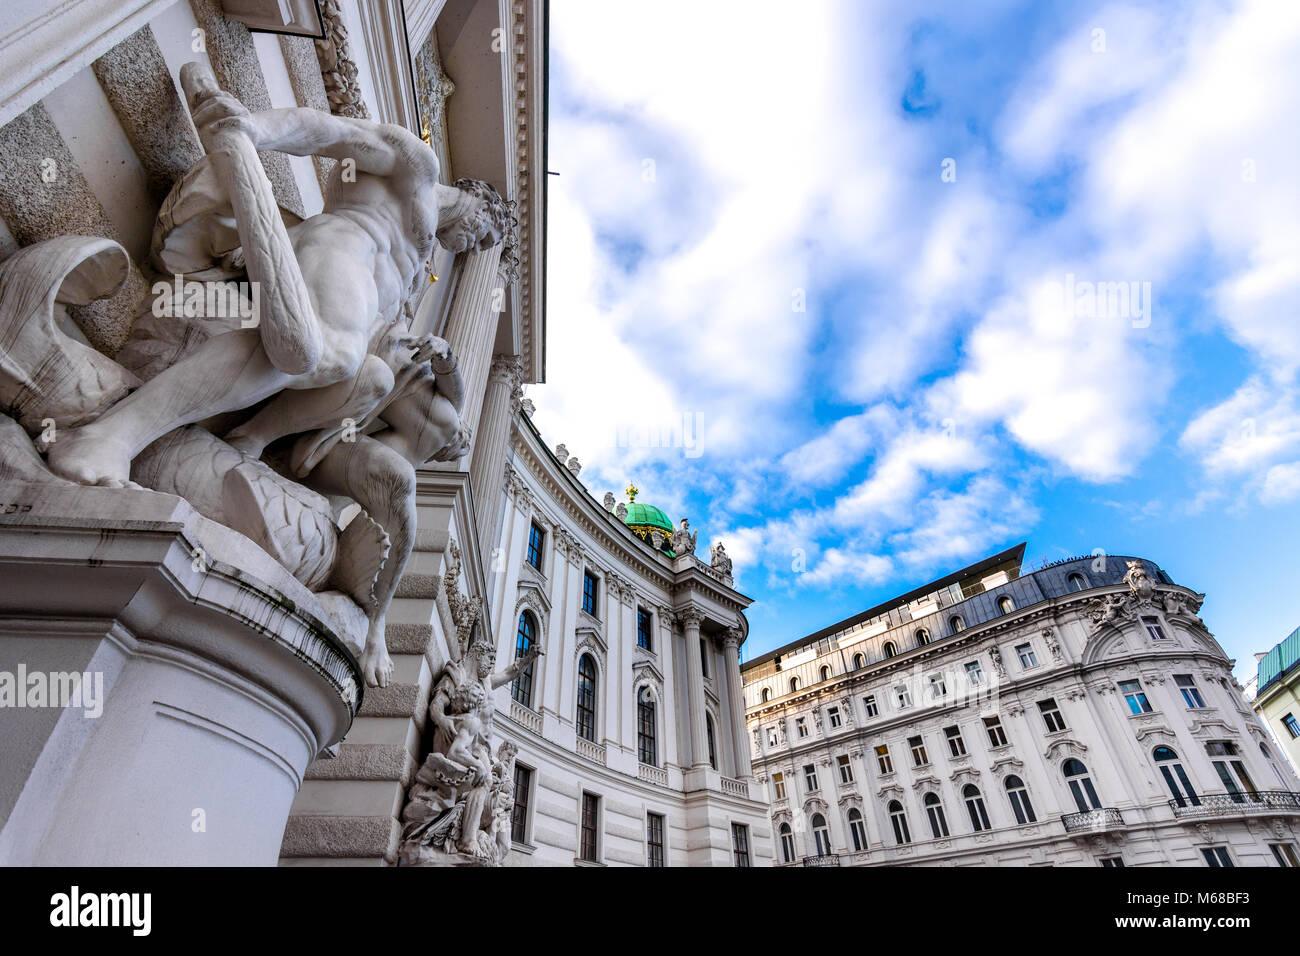 Royal Palace of Hofburg in Vienna, Austria Stock Photo